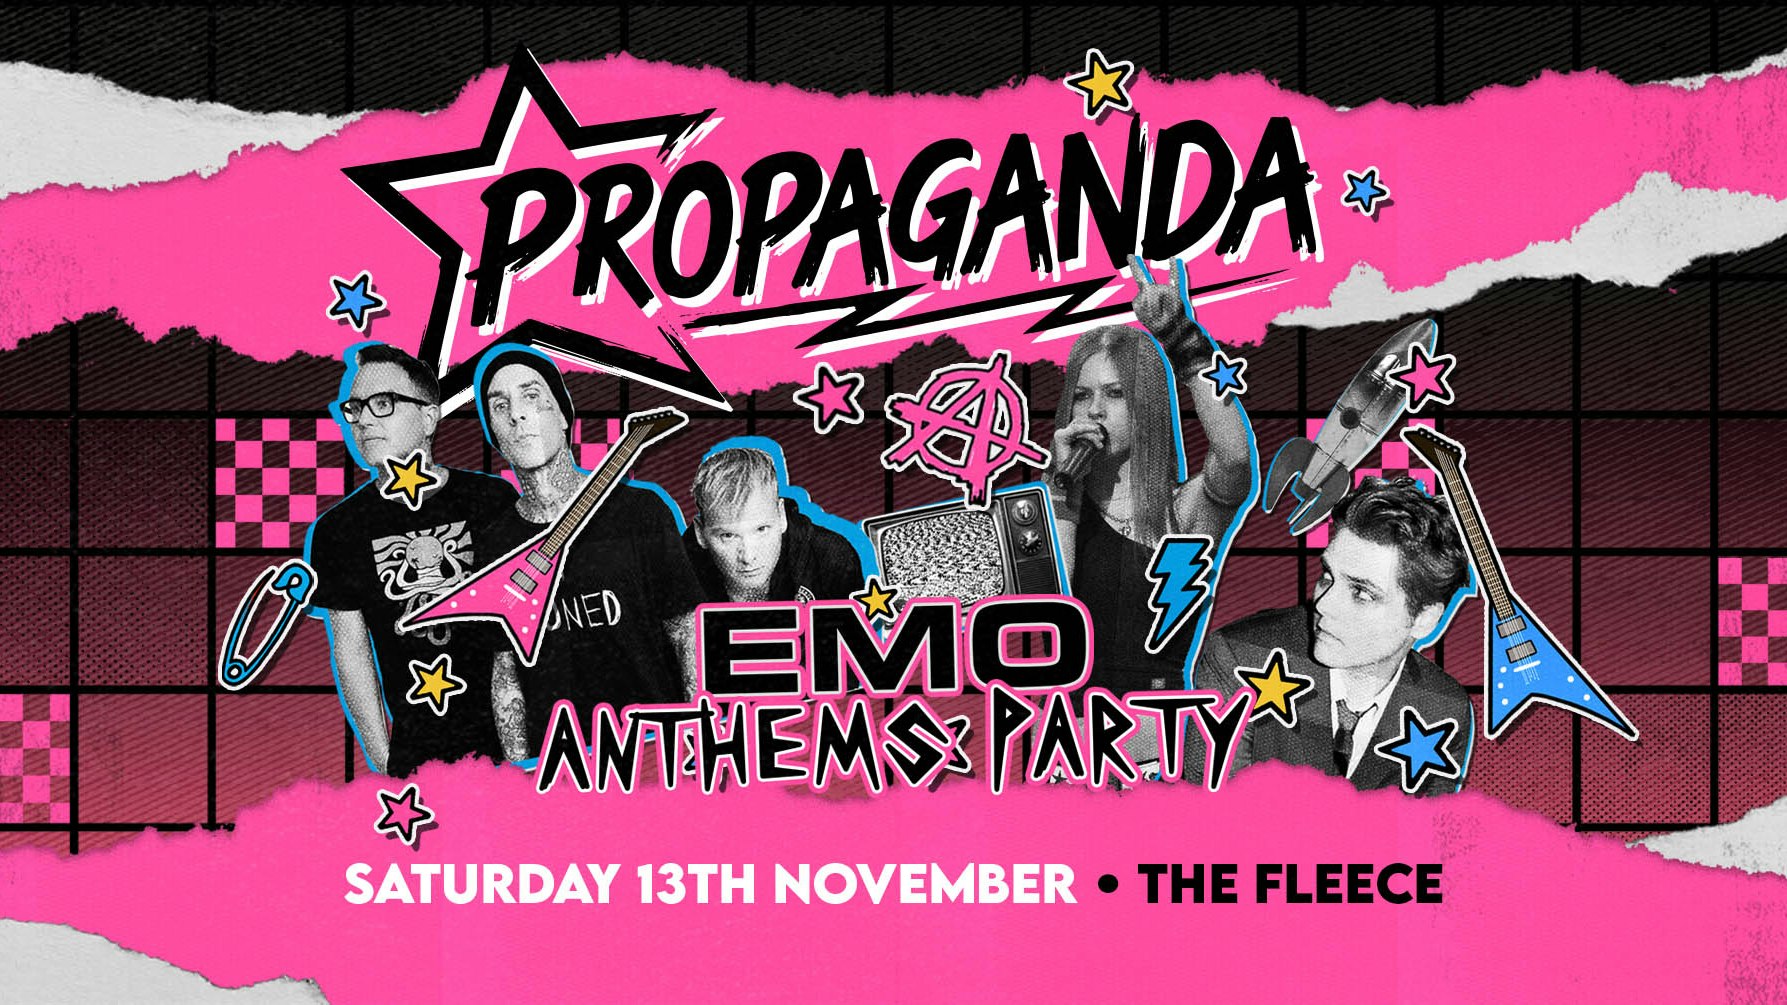 Propaganda Bristol – Emo Anthems Party!